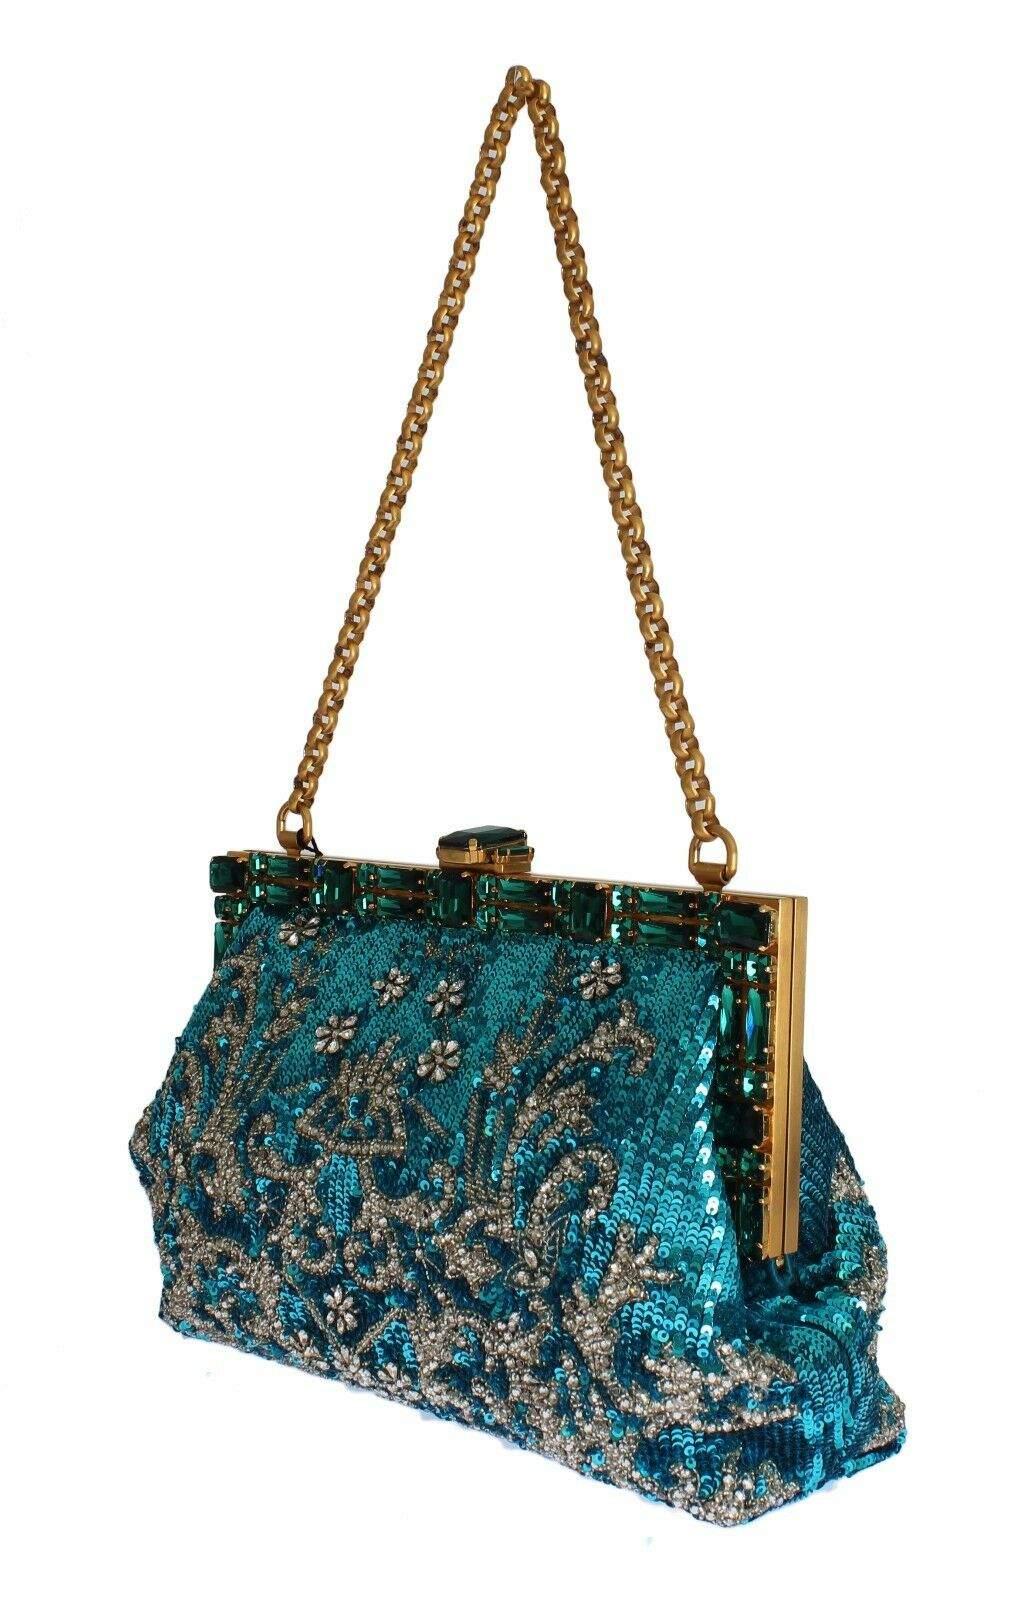 Dolce & Gabbana Clear Crystal Gold Evening Clutch Purse in Blue | Lyst